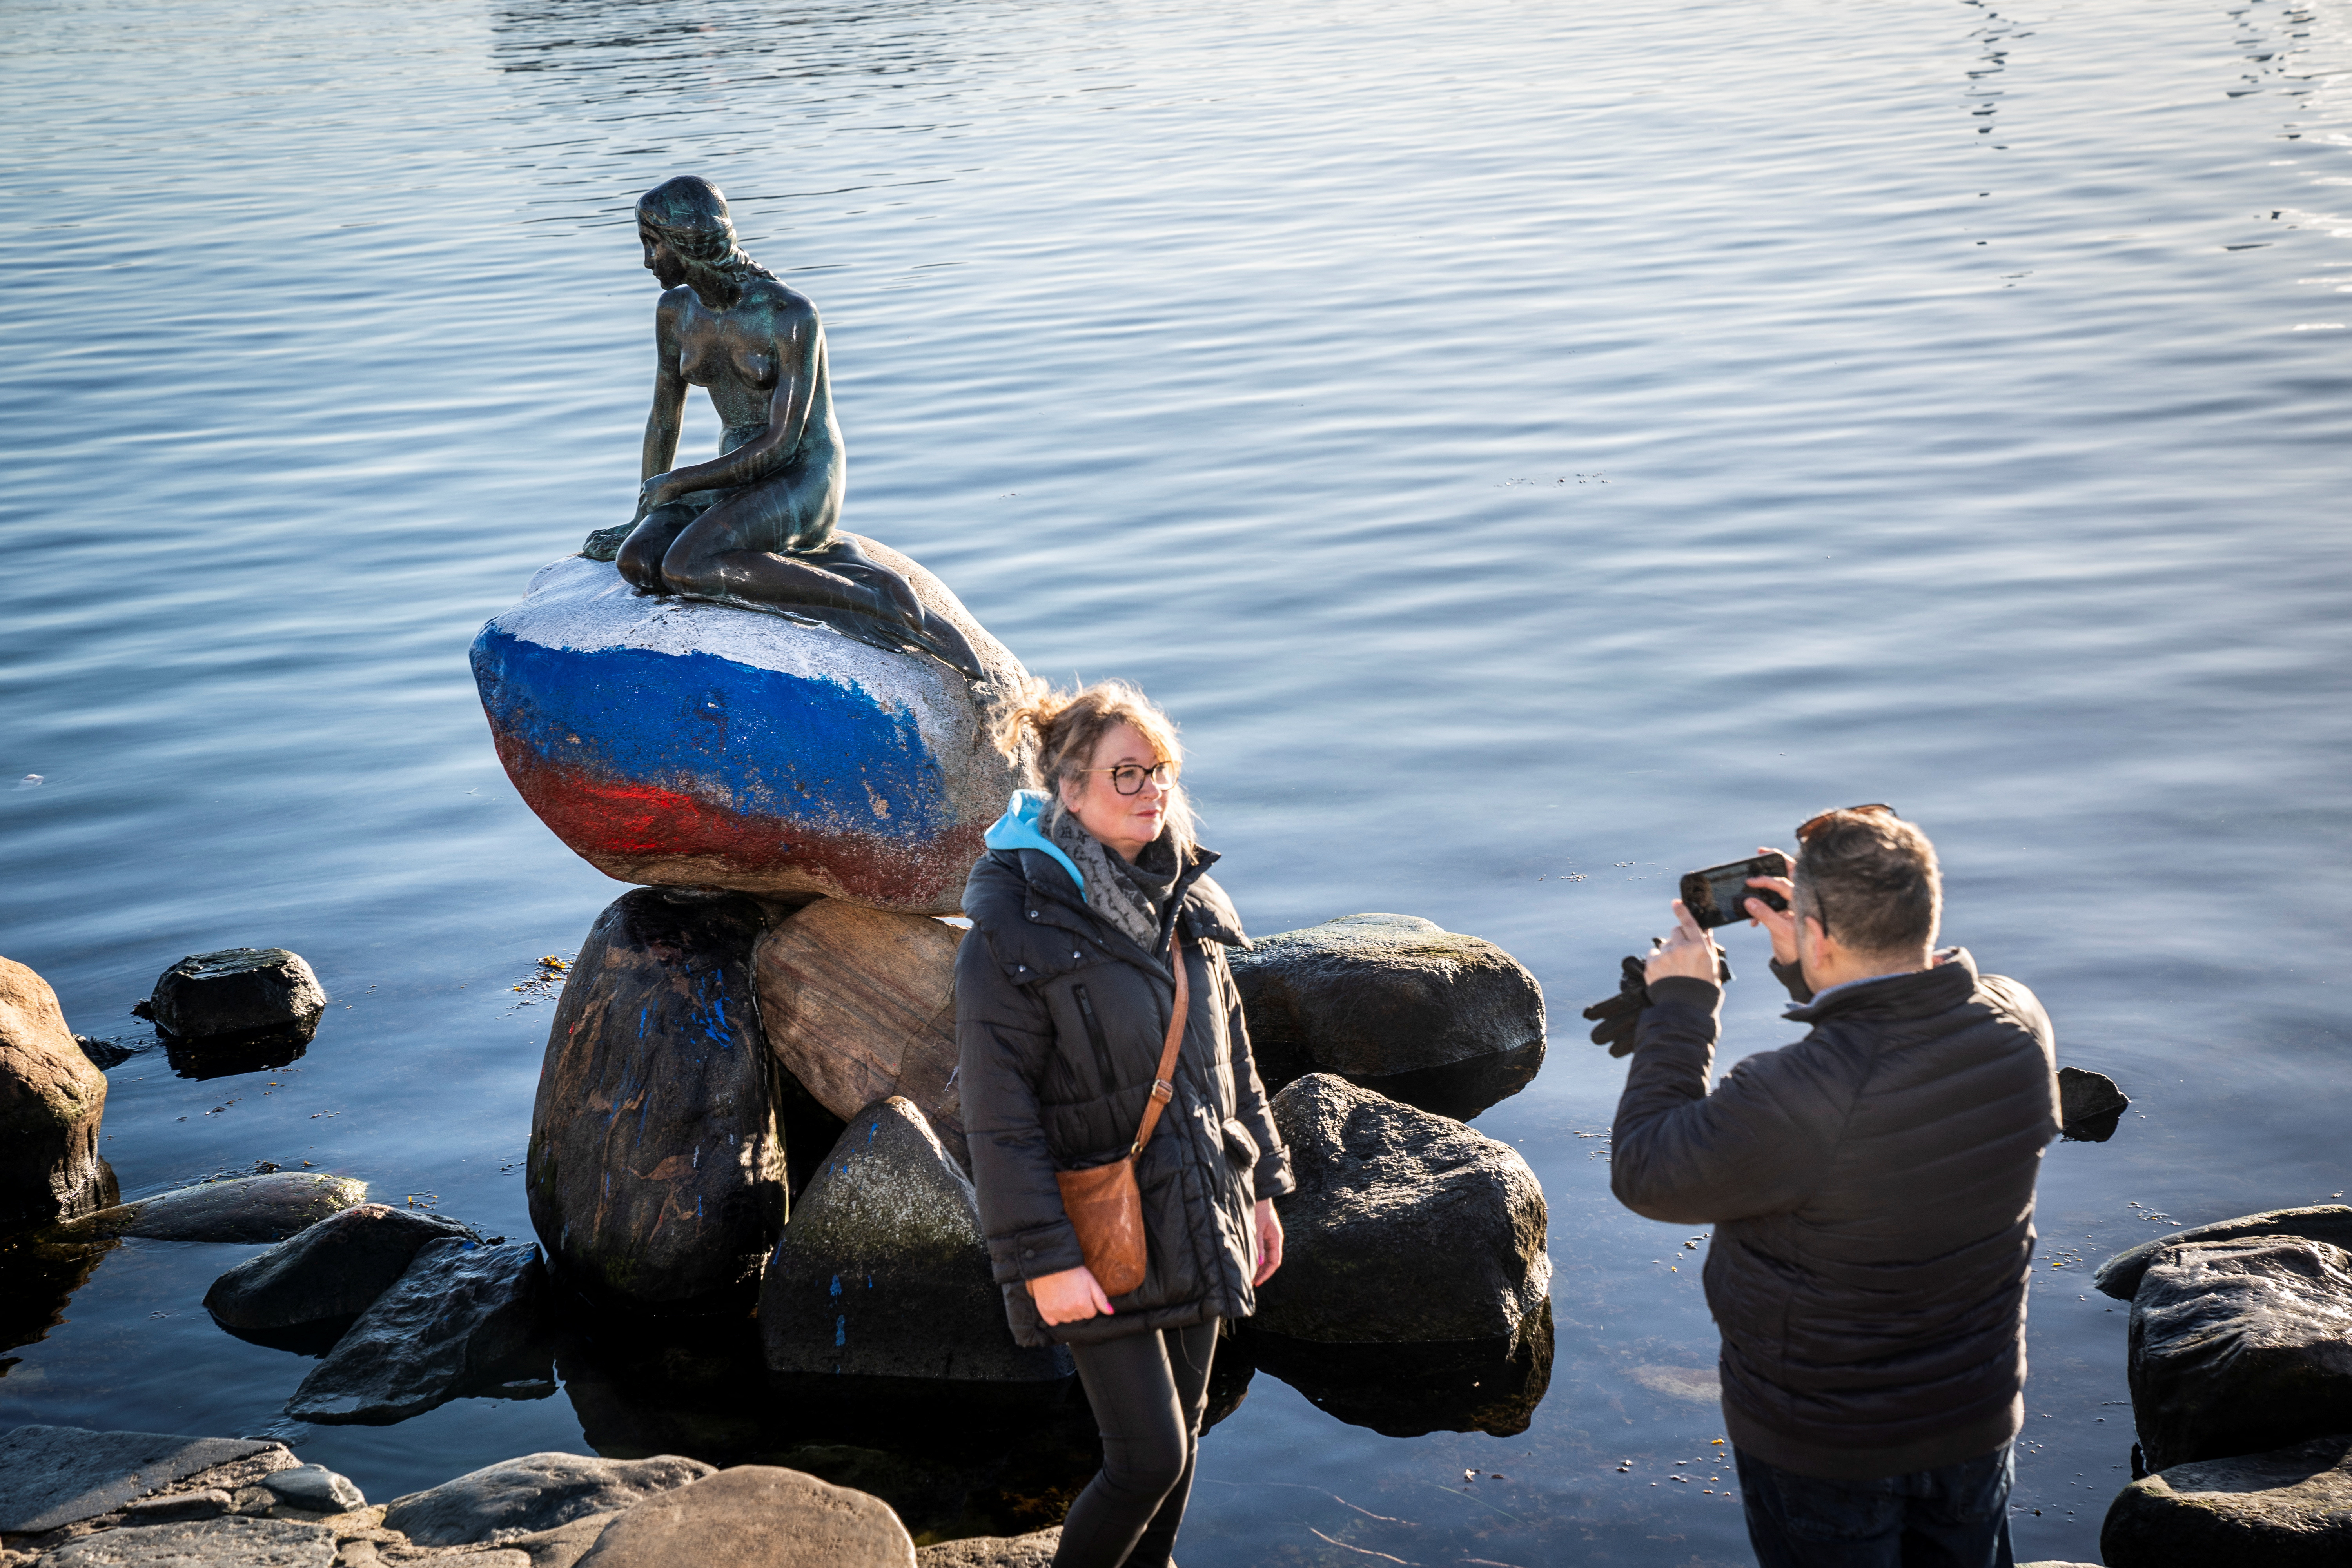 Little Mermaid sculpture has Russian flag colours painted on it in Copenhagen